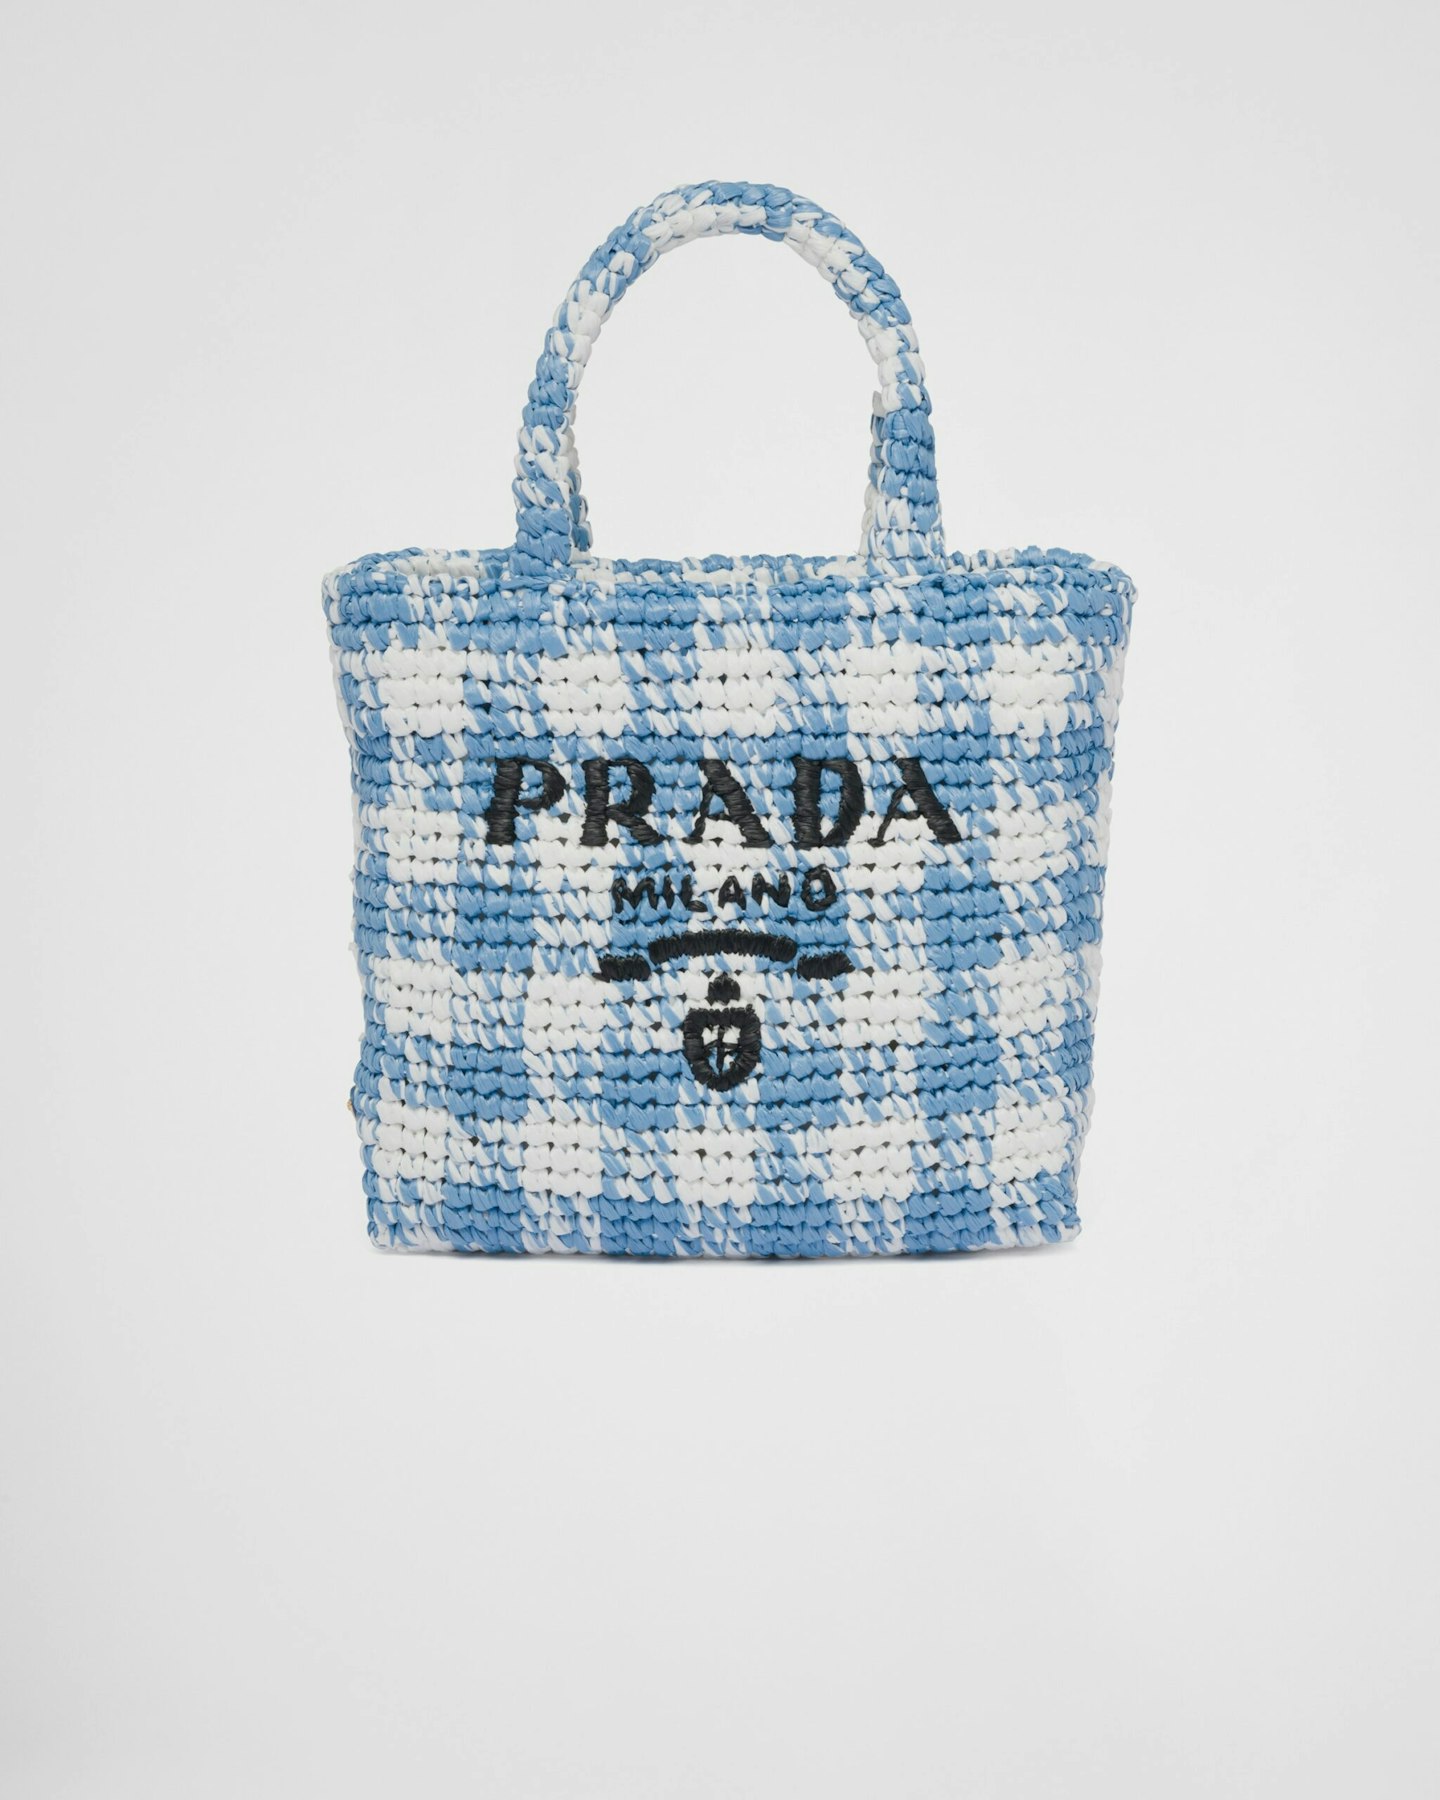 This Prada Crochet Bag Is Perfect Summer Accessory